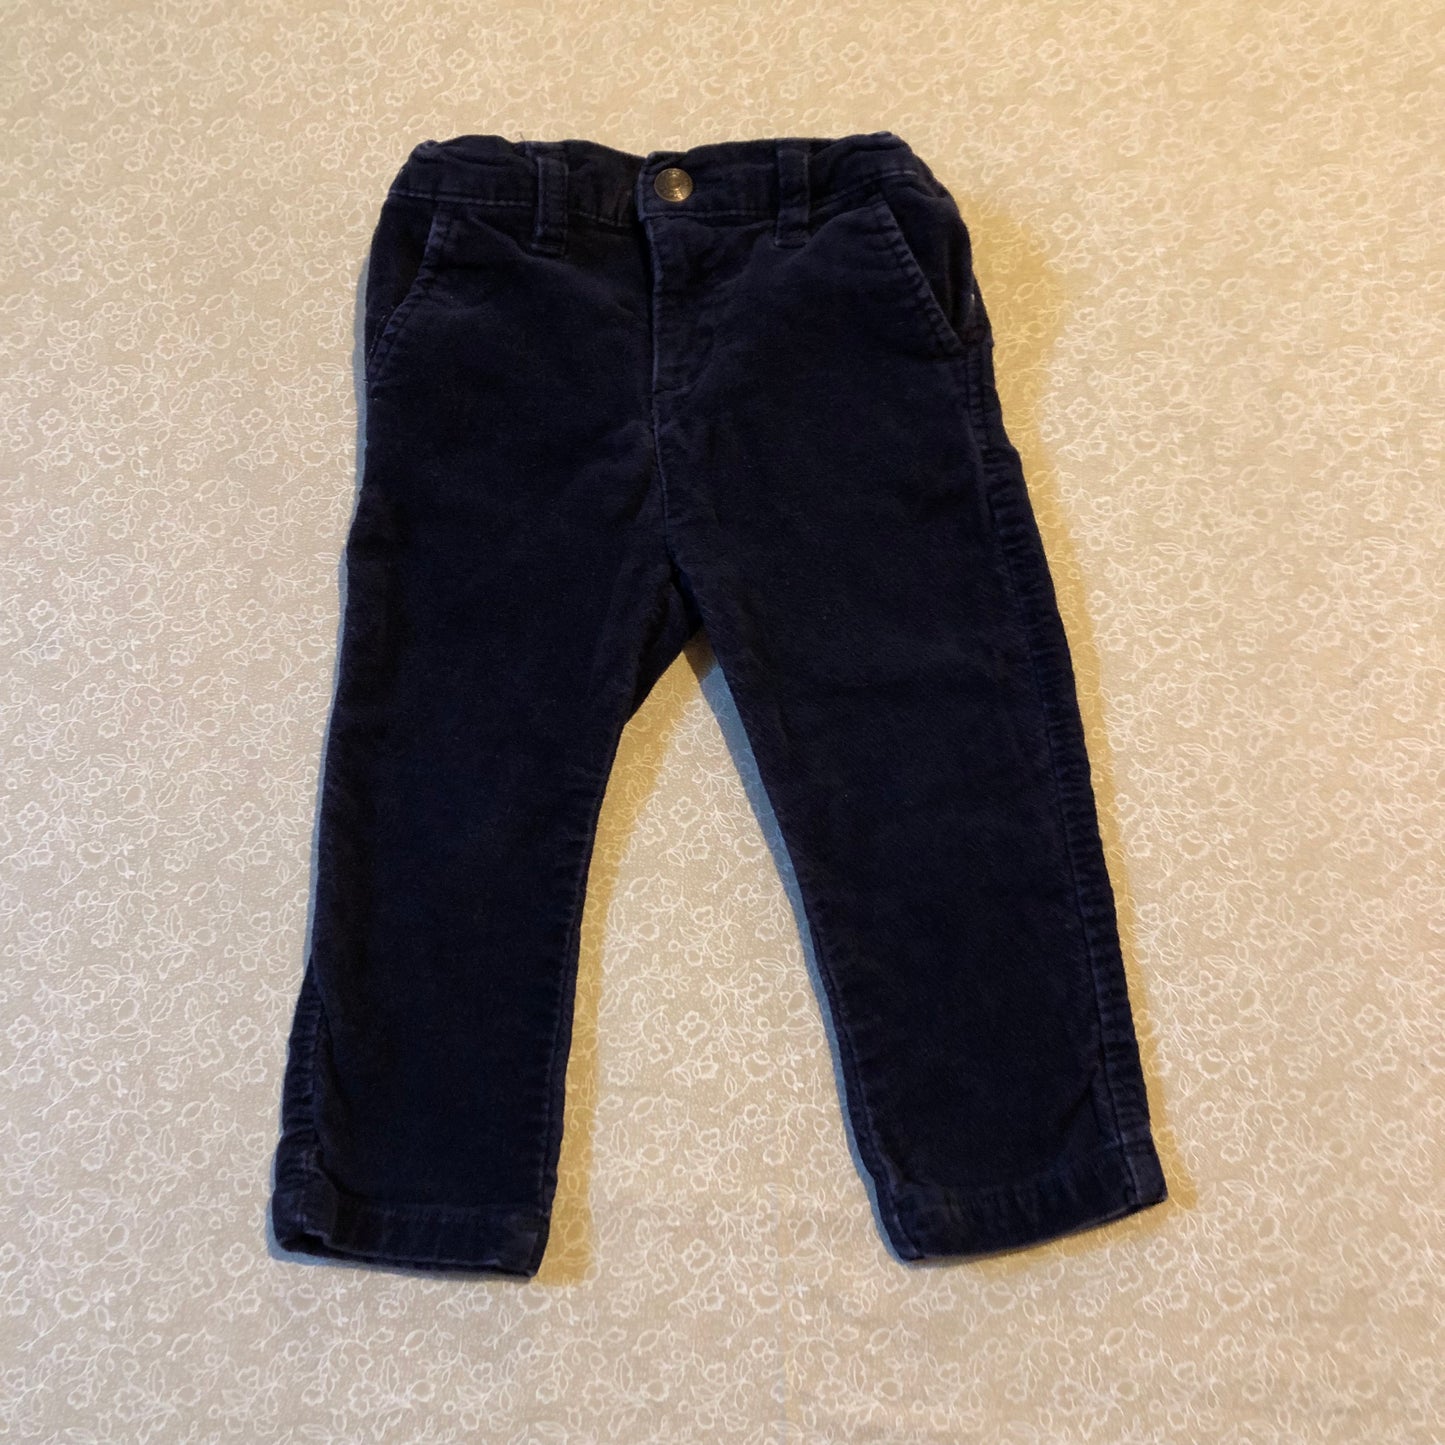 18-months-pants-oshkosh-dark-blue-cords